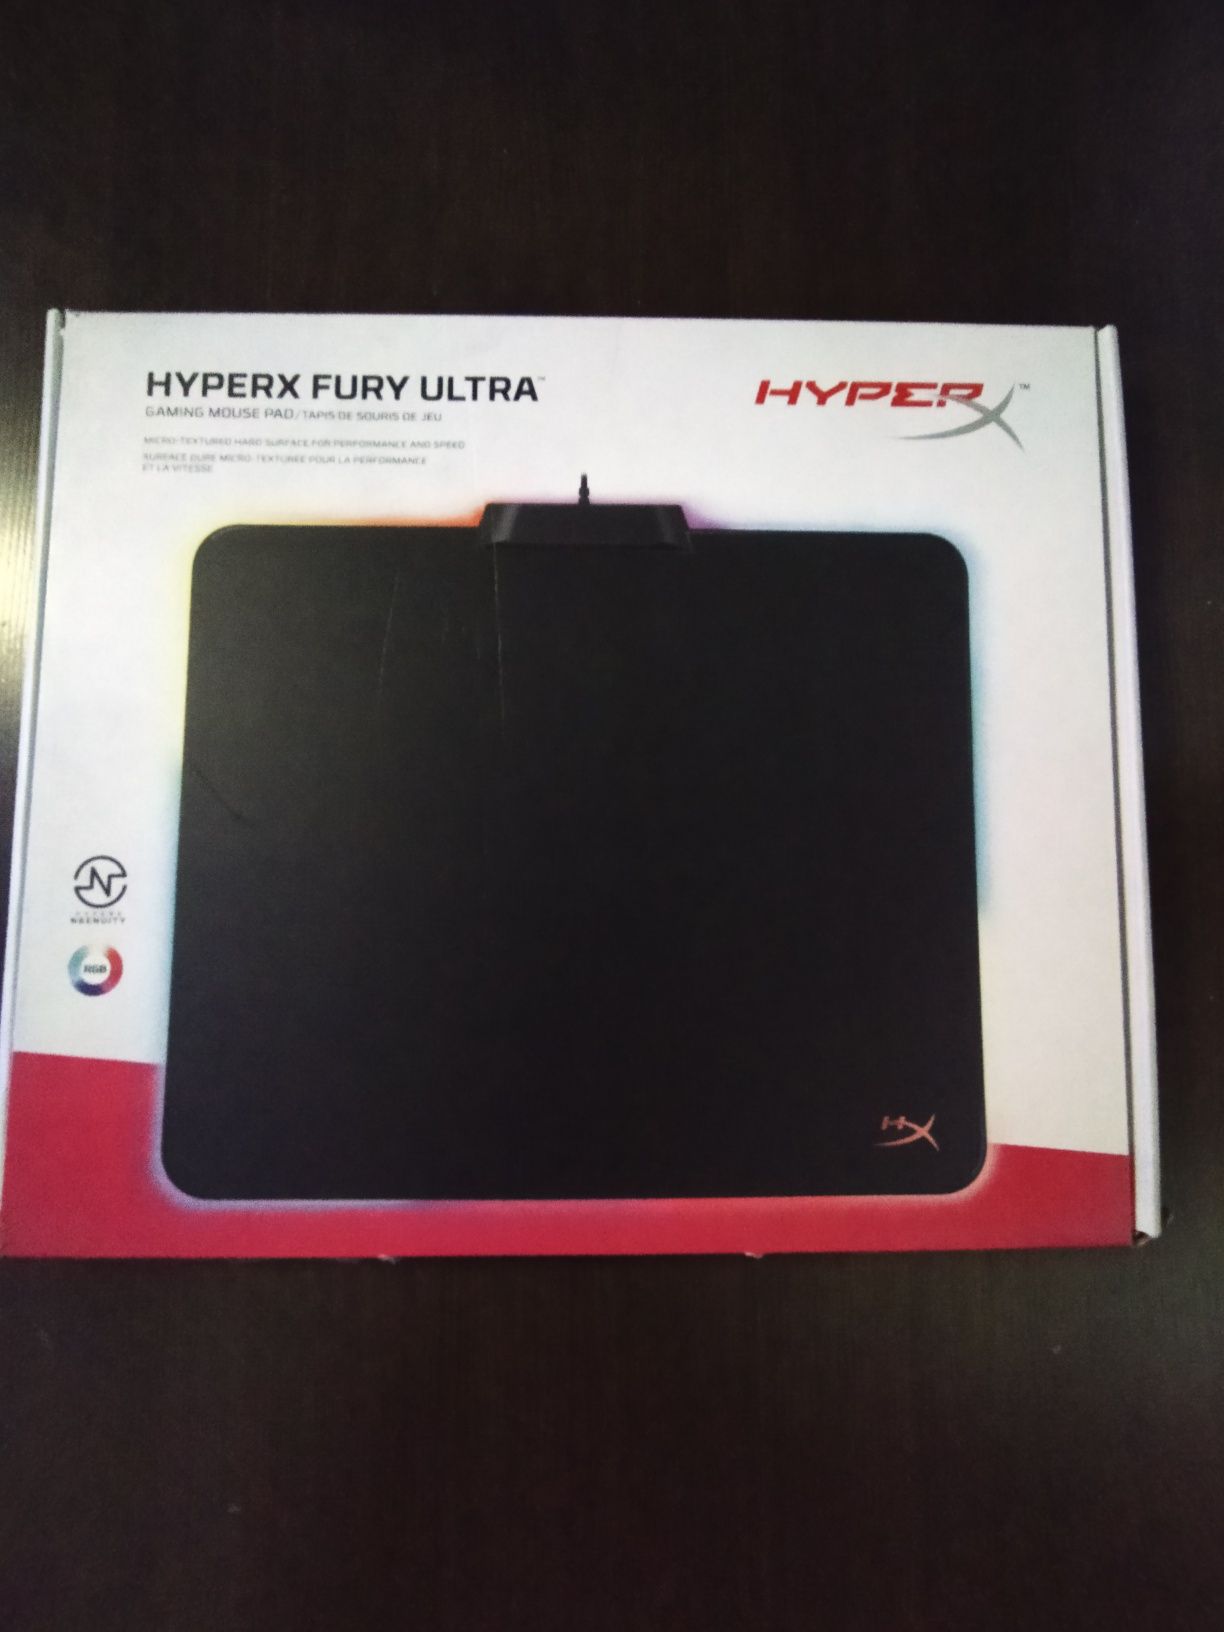 Mouse pad Hyperx Fury Ultra